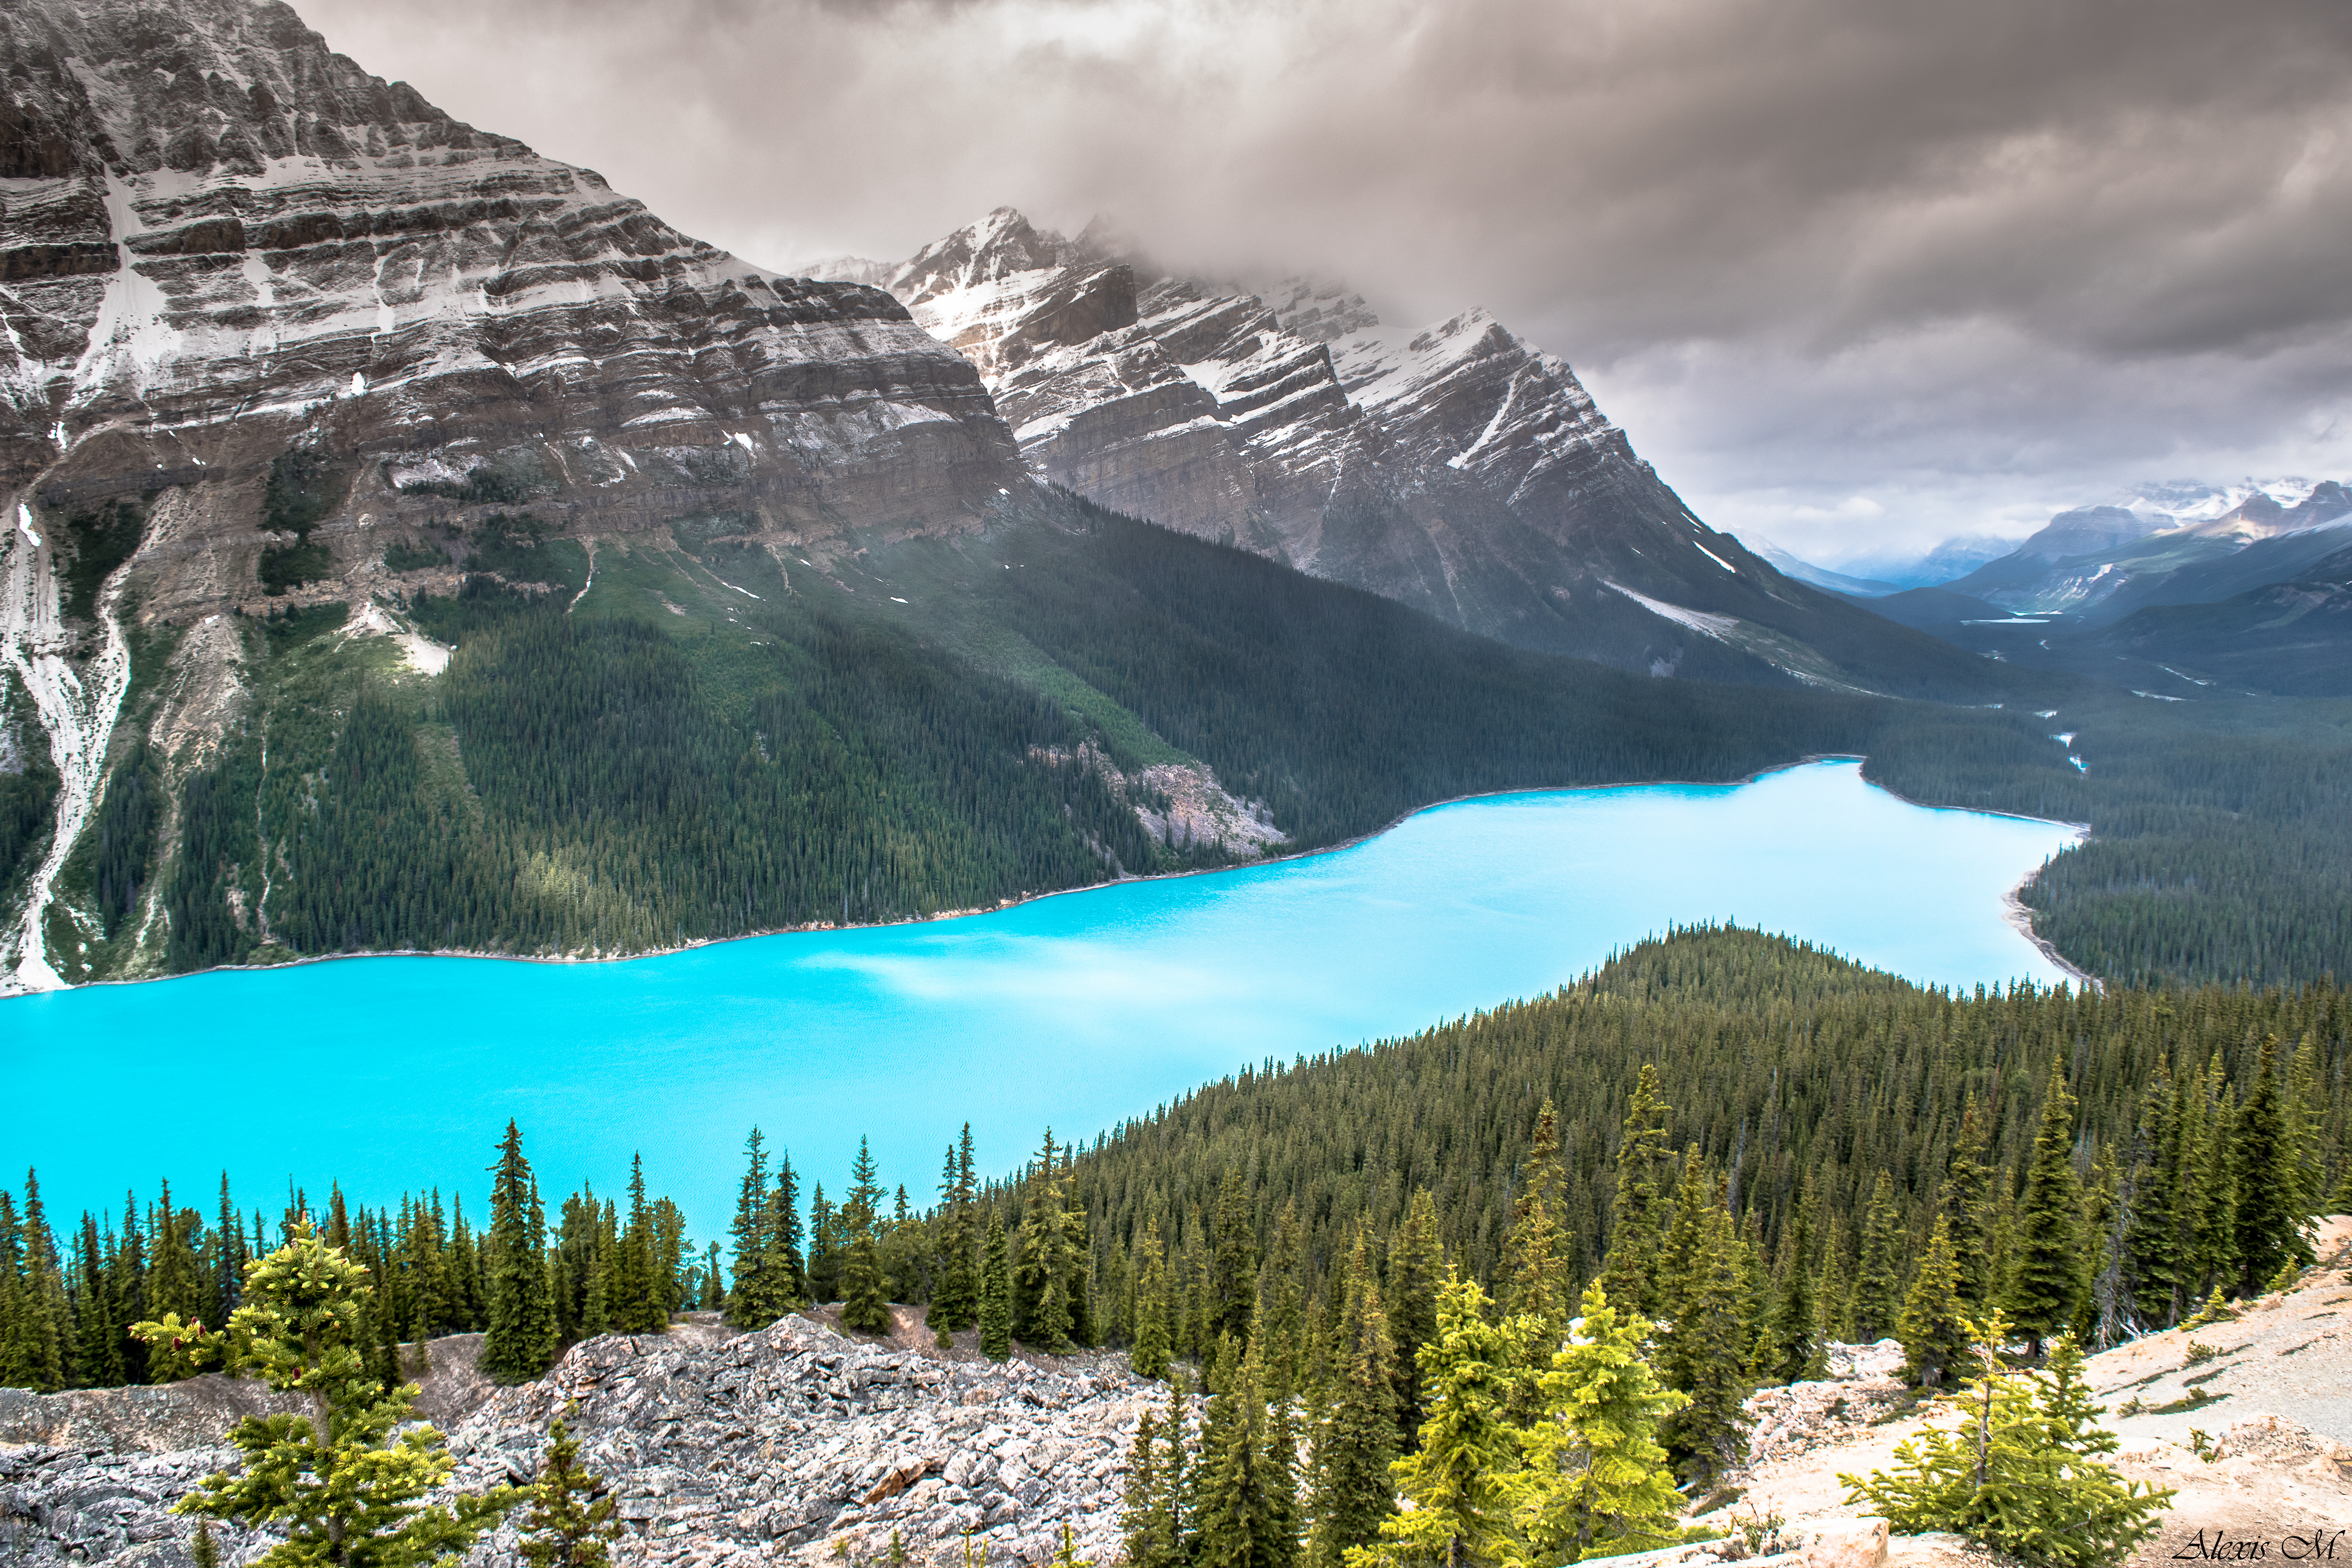 Wallpapers rocks Banff National Park mountains on the desktop